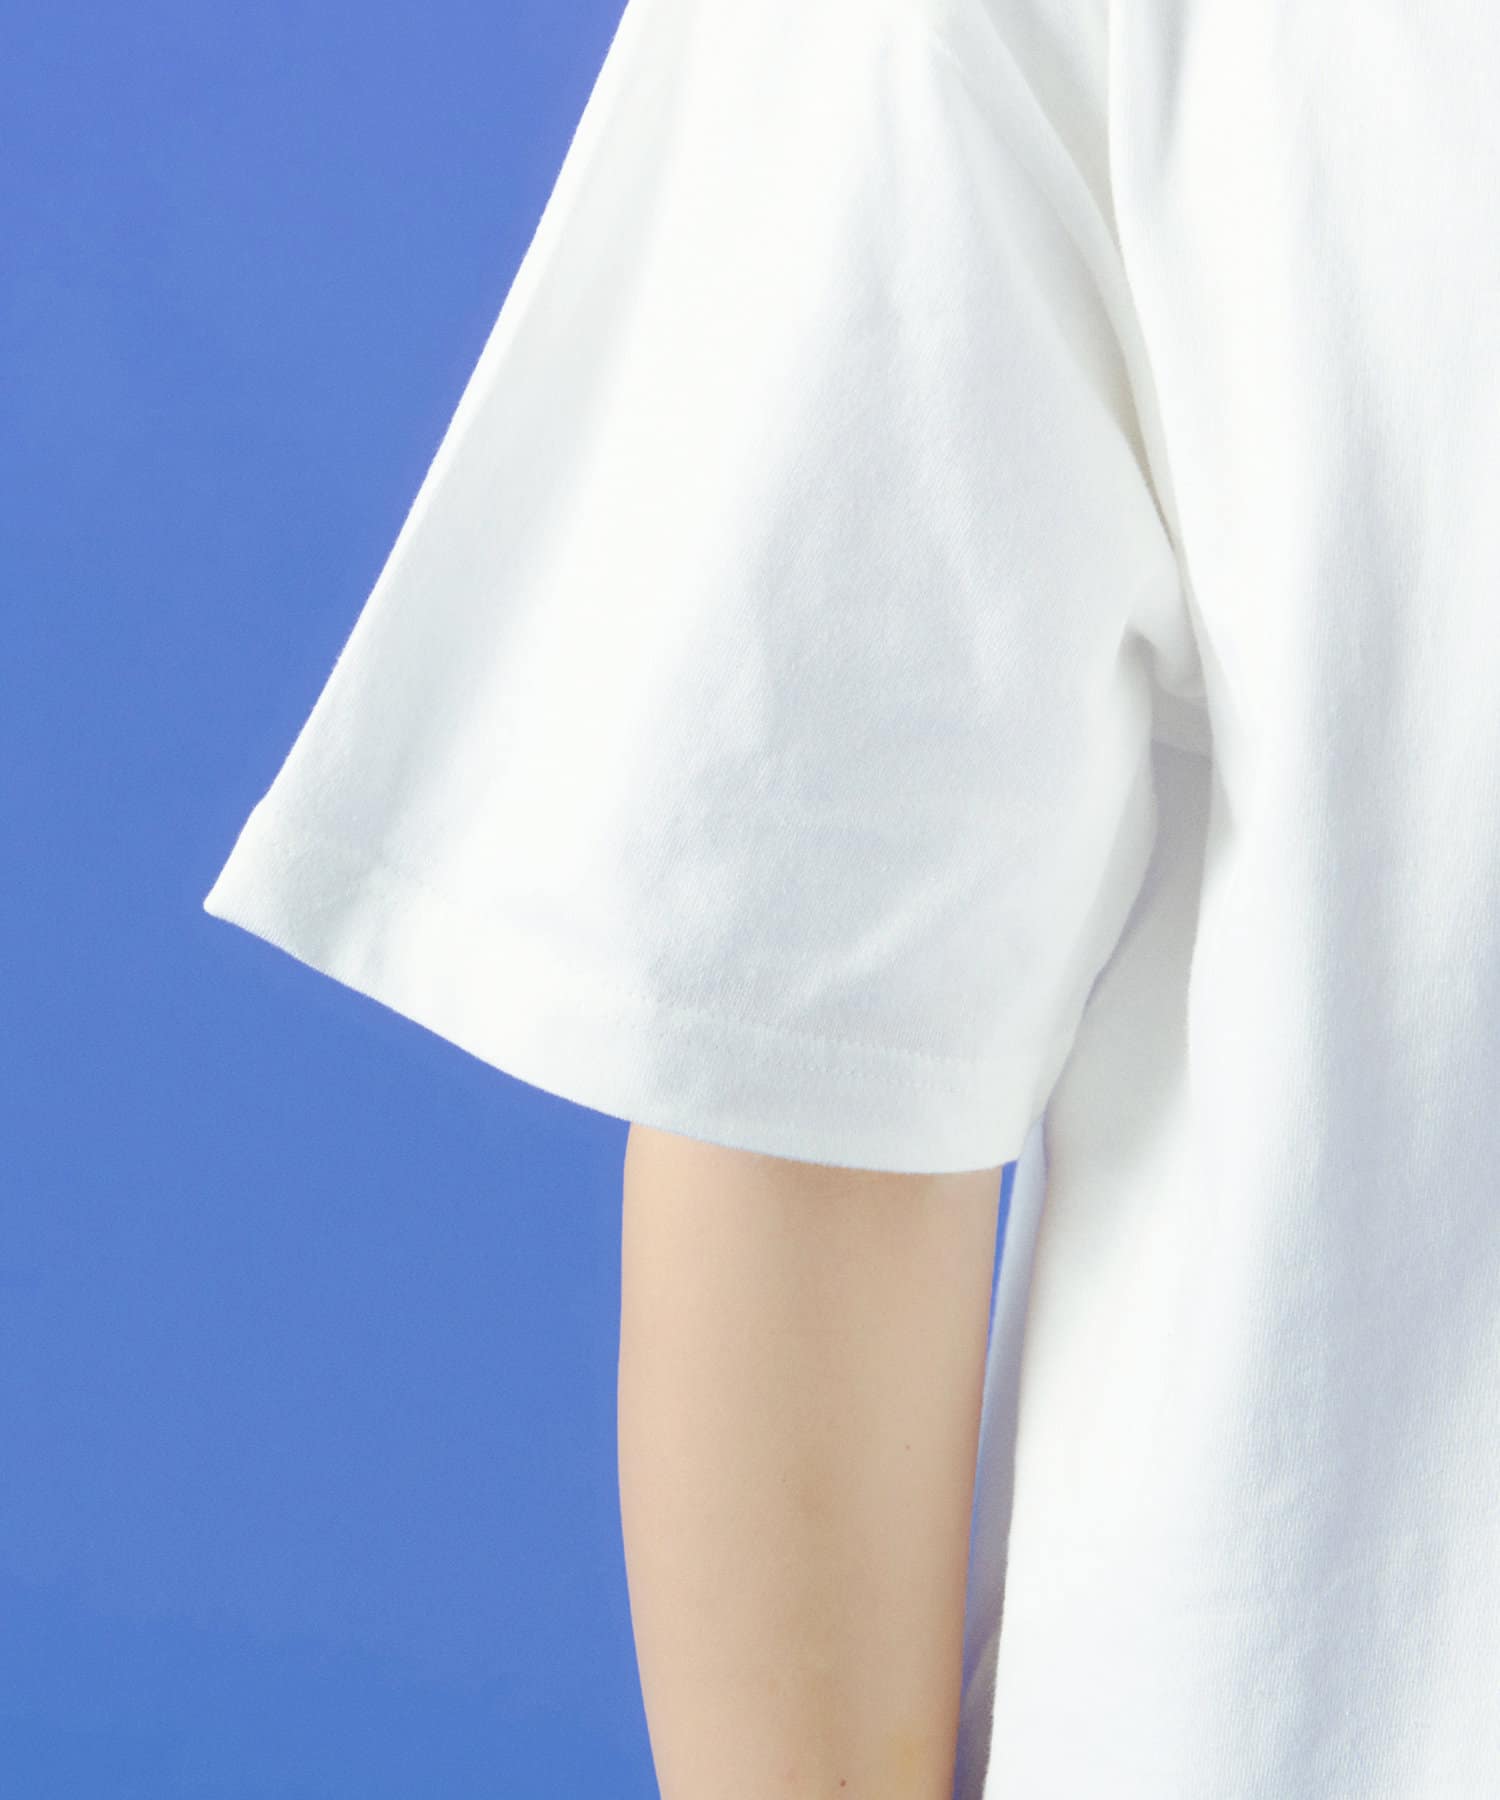 POKEUNI(ポケユニ) Tシャツ WALLY：M・L・XLサイズ